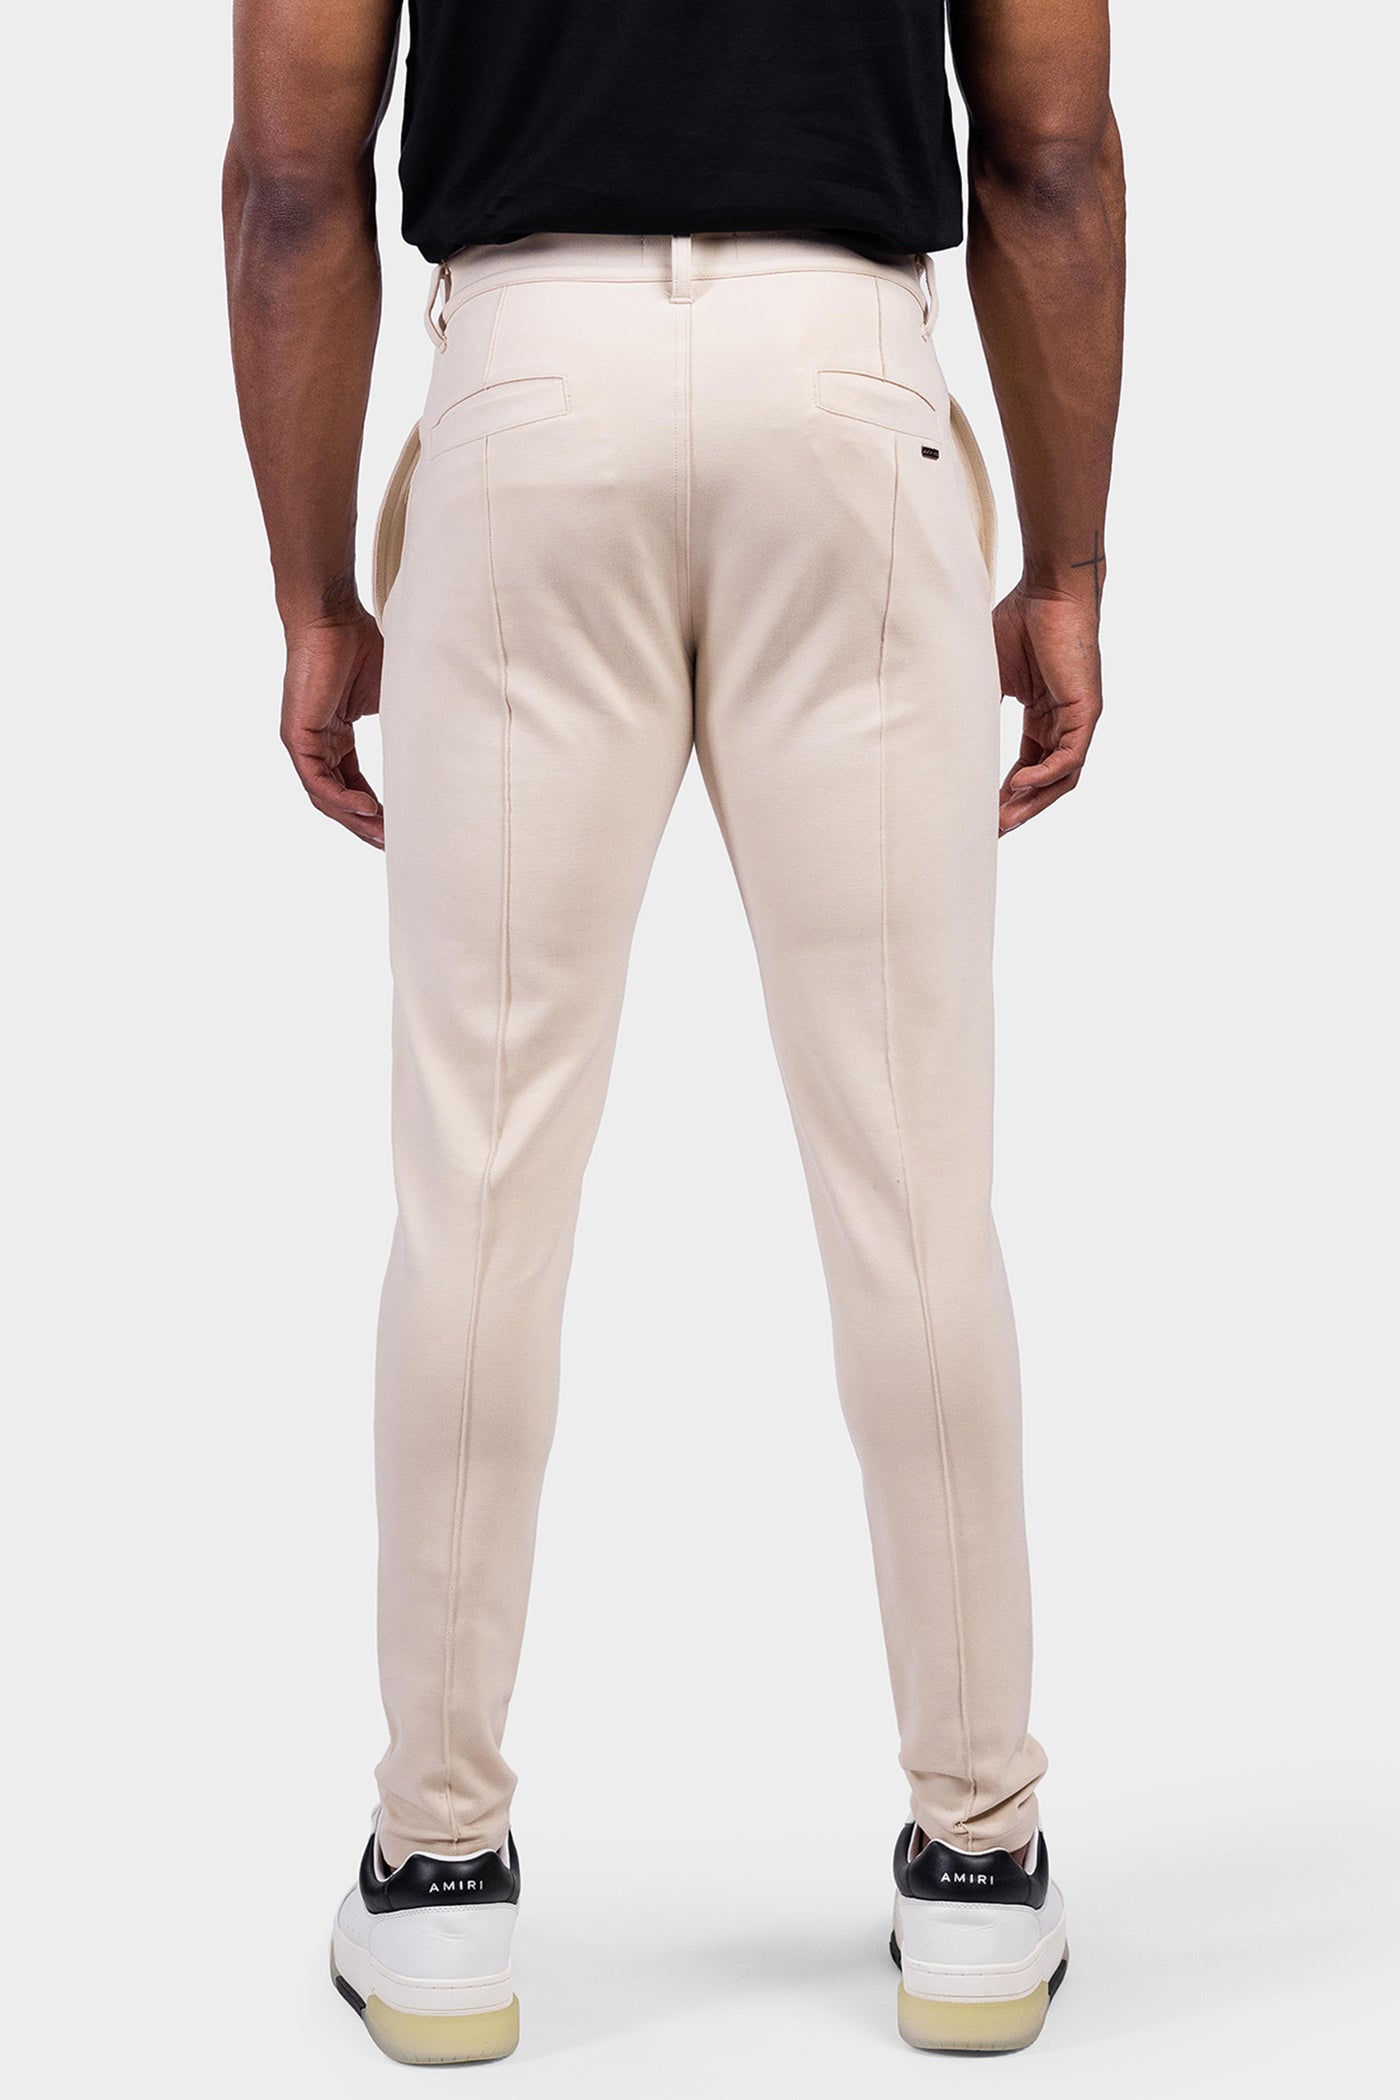 Men's White Pants